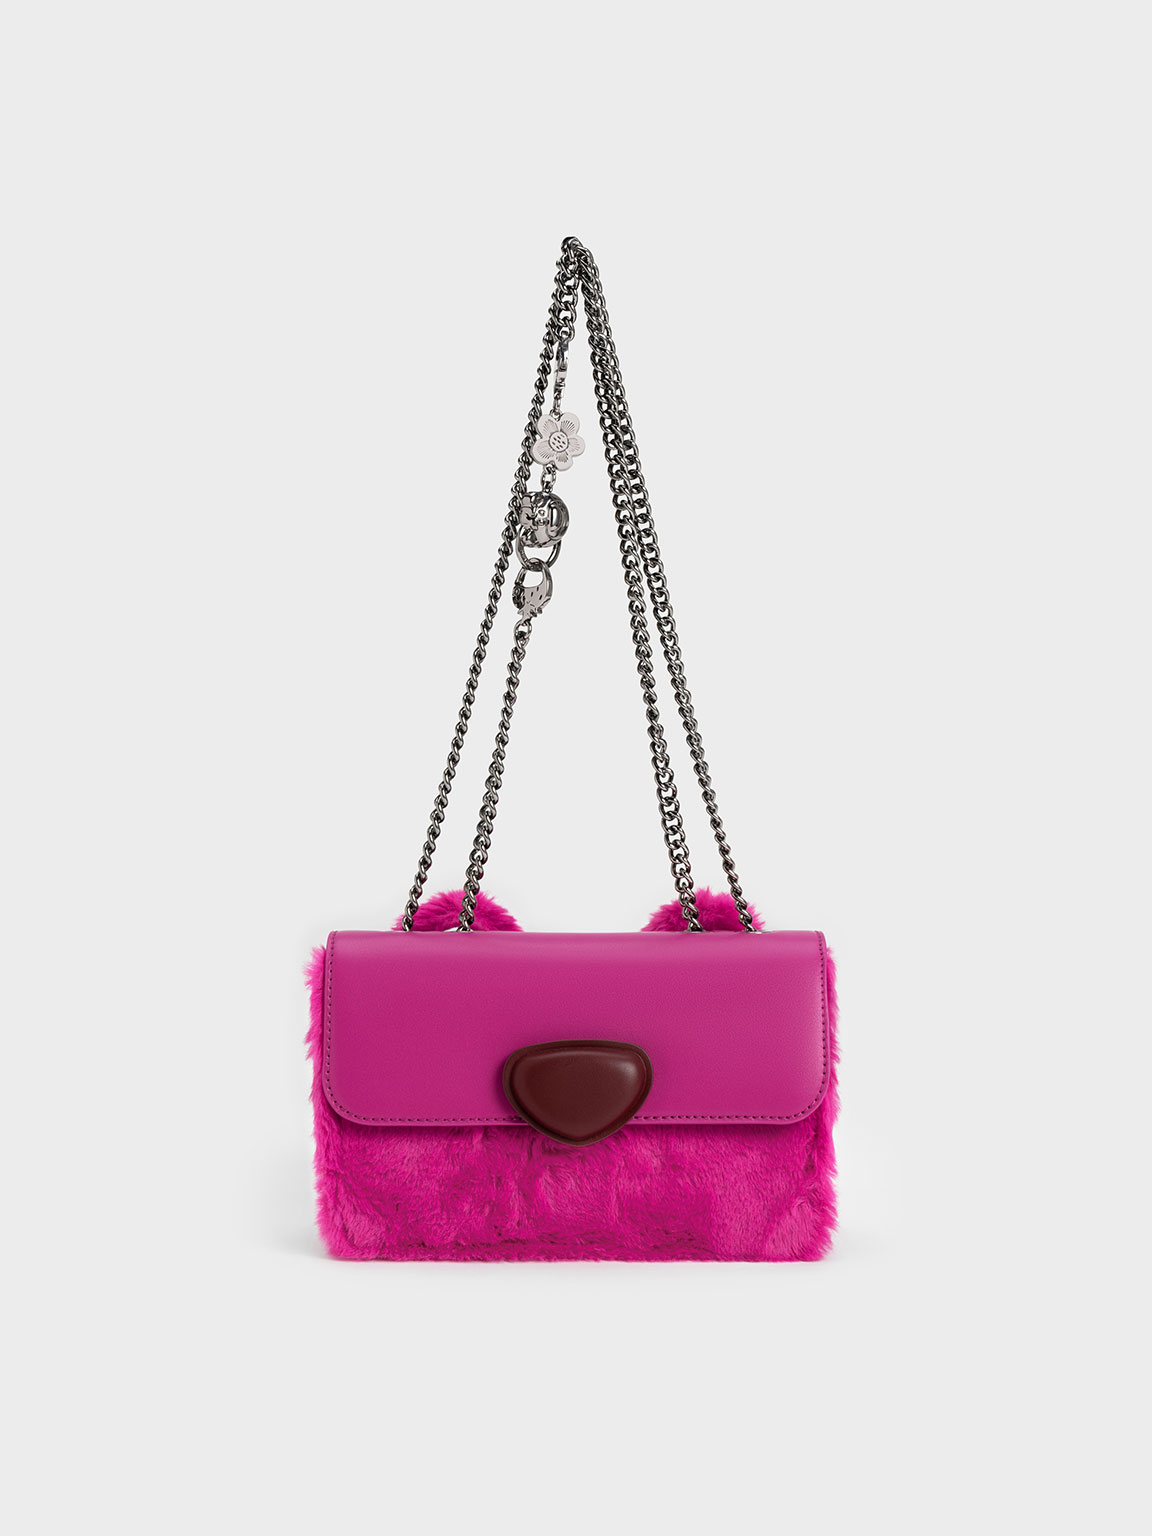 Limited Edition Longchamp Pink Furry Cat Handbag in Store Window, NYC  Stock Photo - Alamy